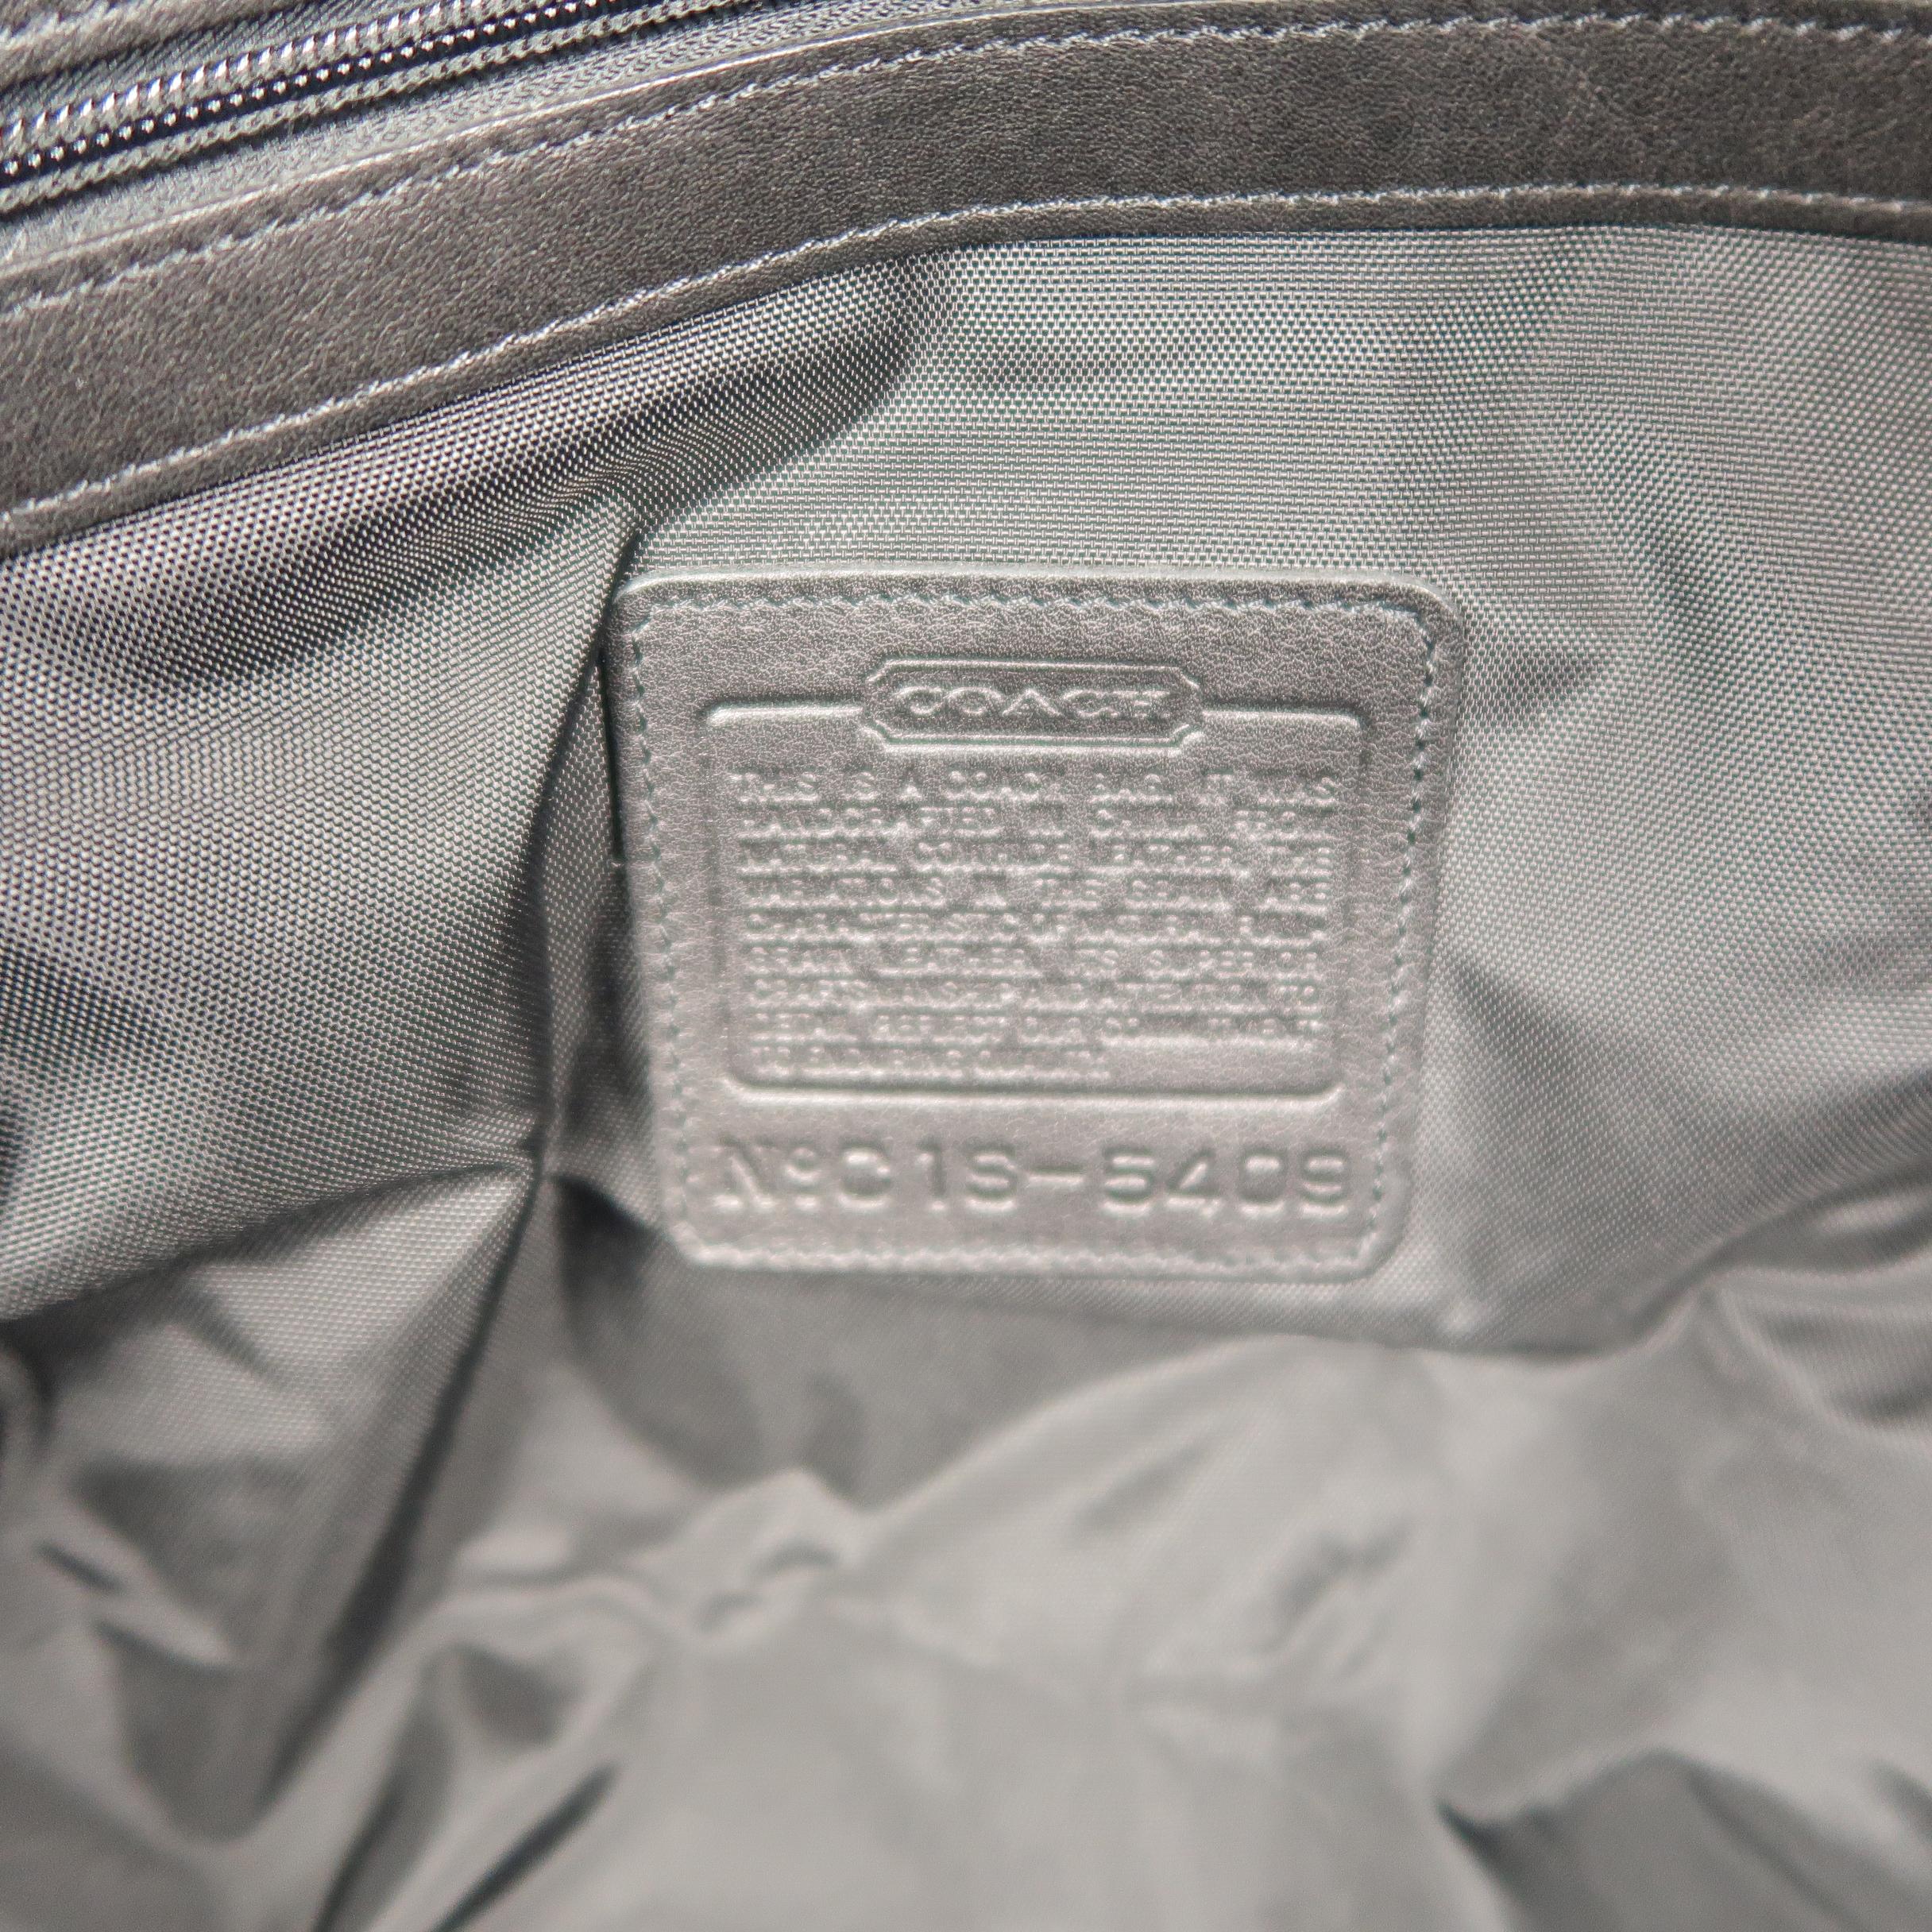 COACH Black Leather Top Lock Zip Travel Duffel Bag 6